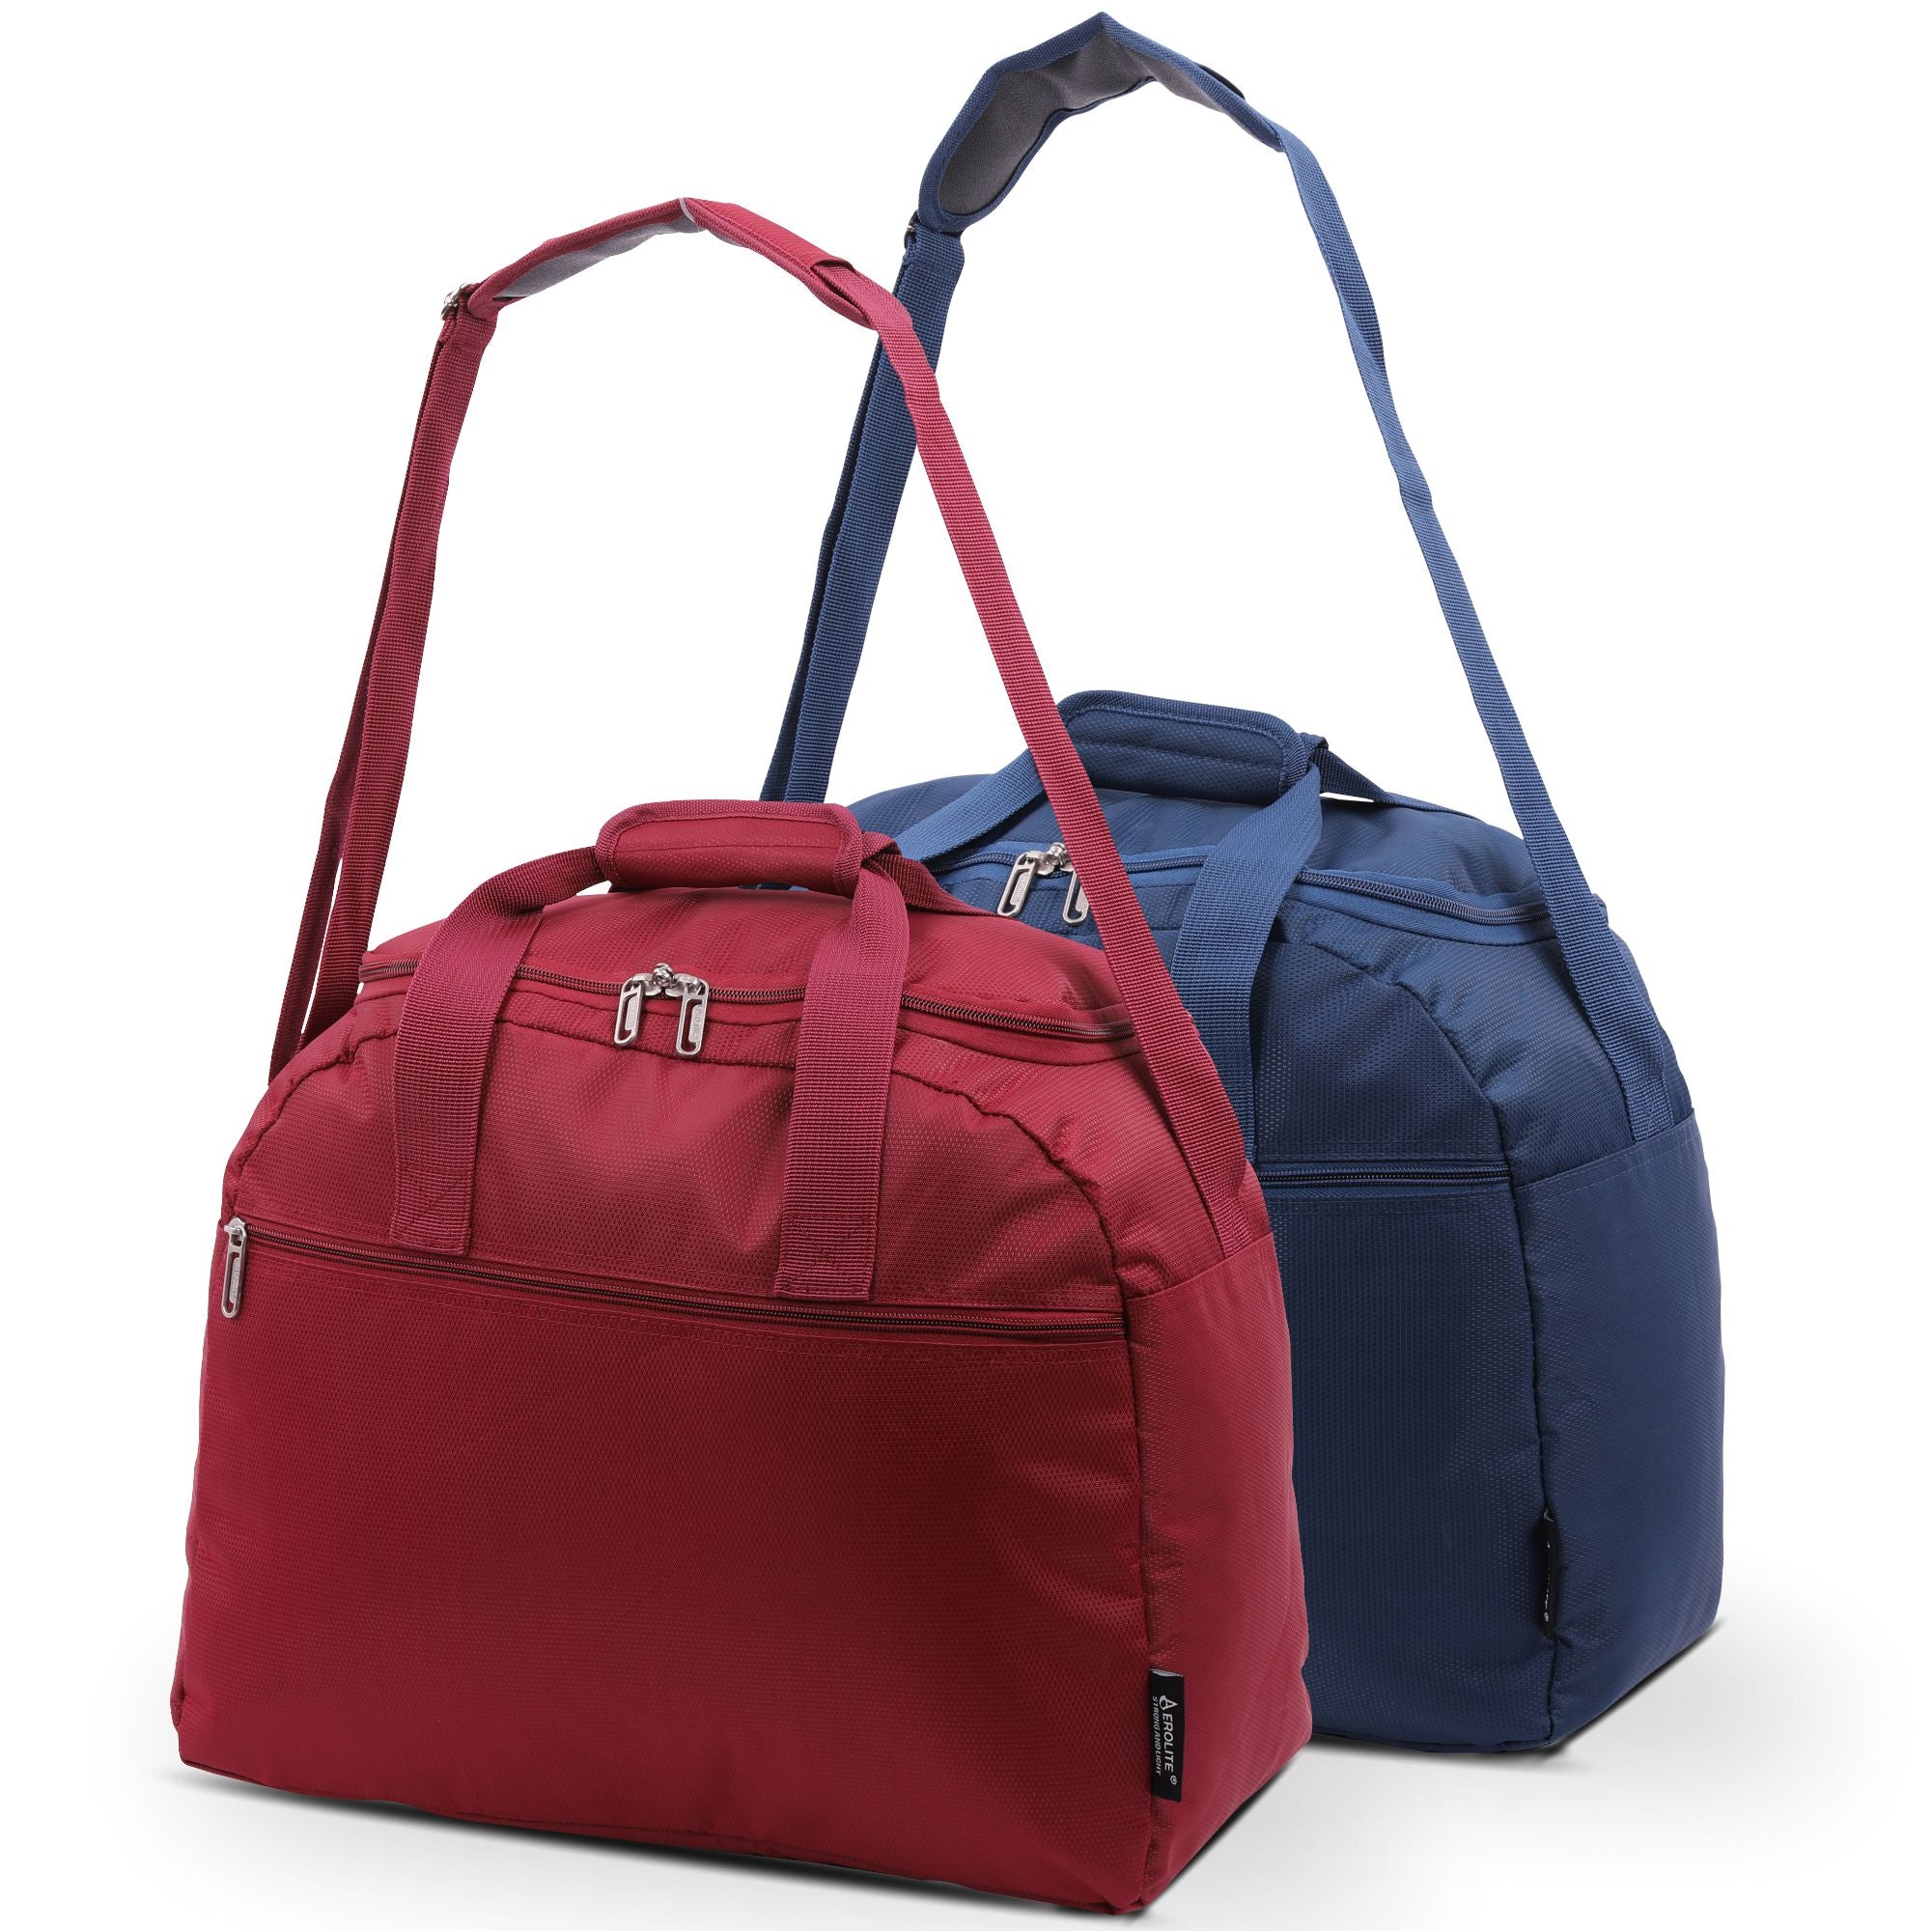 Easyjet Cabin Bag 45X36X20 Underseat Travel Bag Hand Luggage Bag Recycled  PET Ec